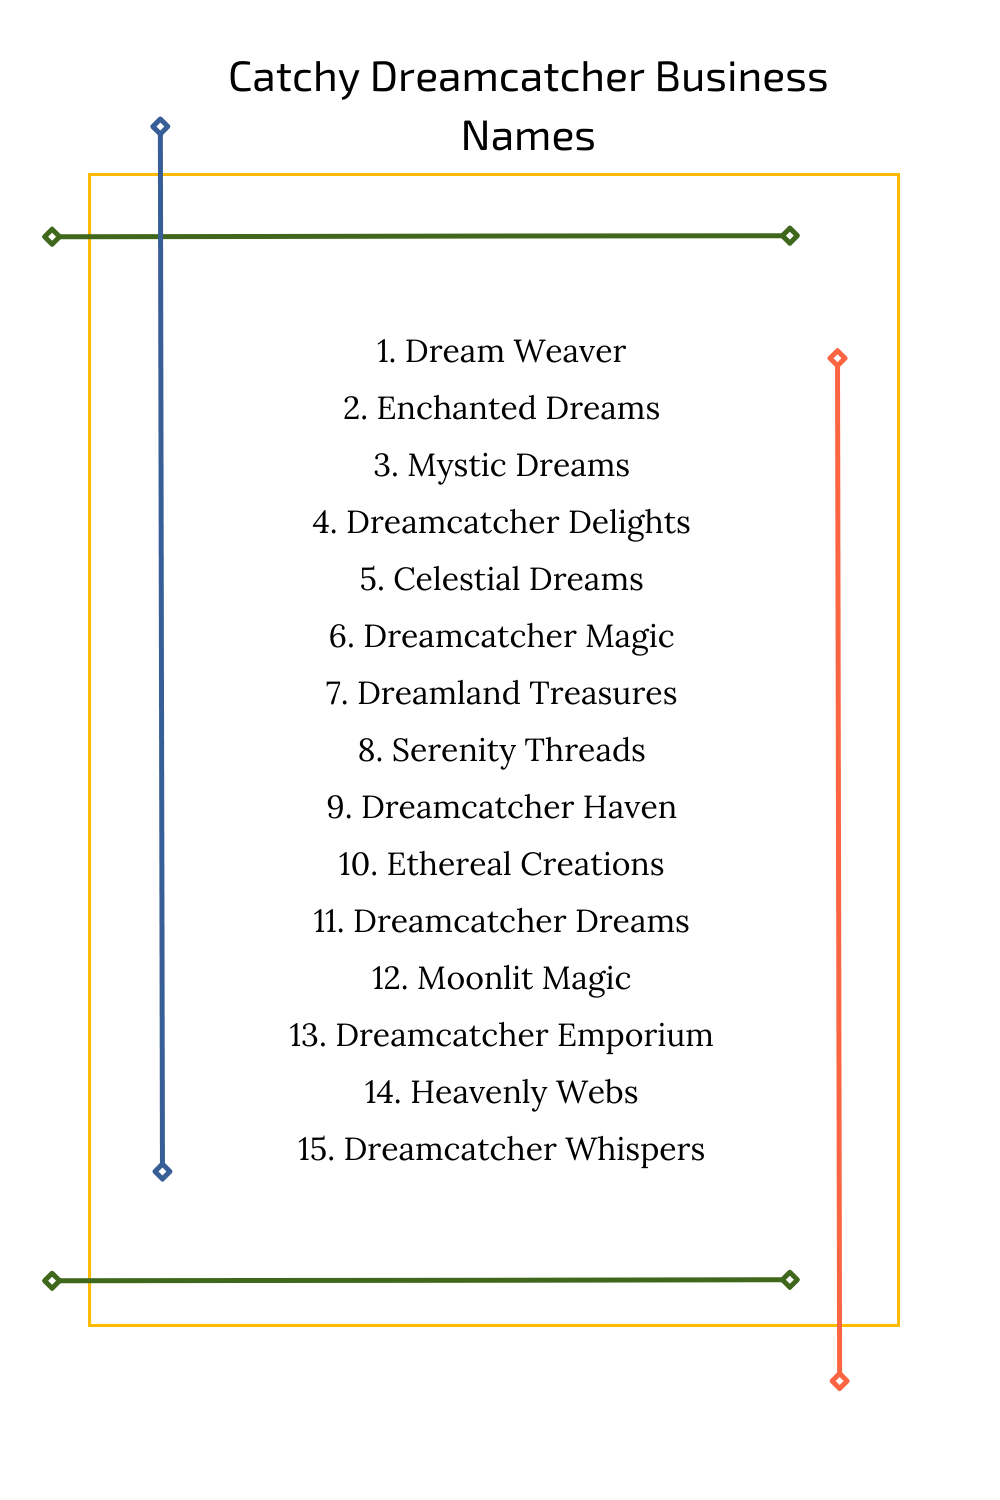 Catchy Dreamcatcher Business Names